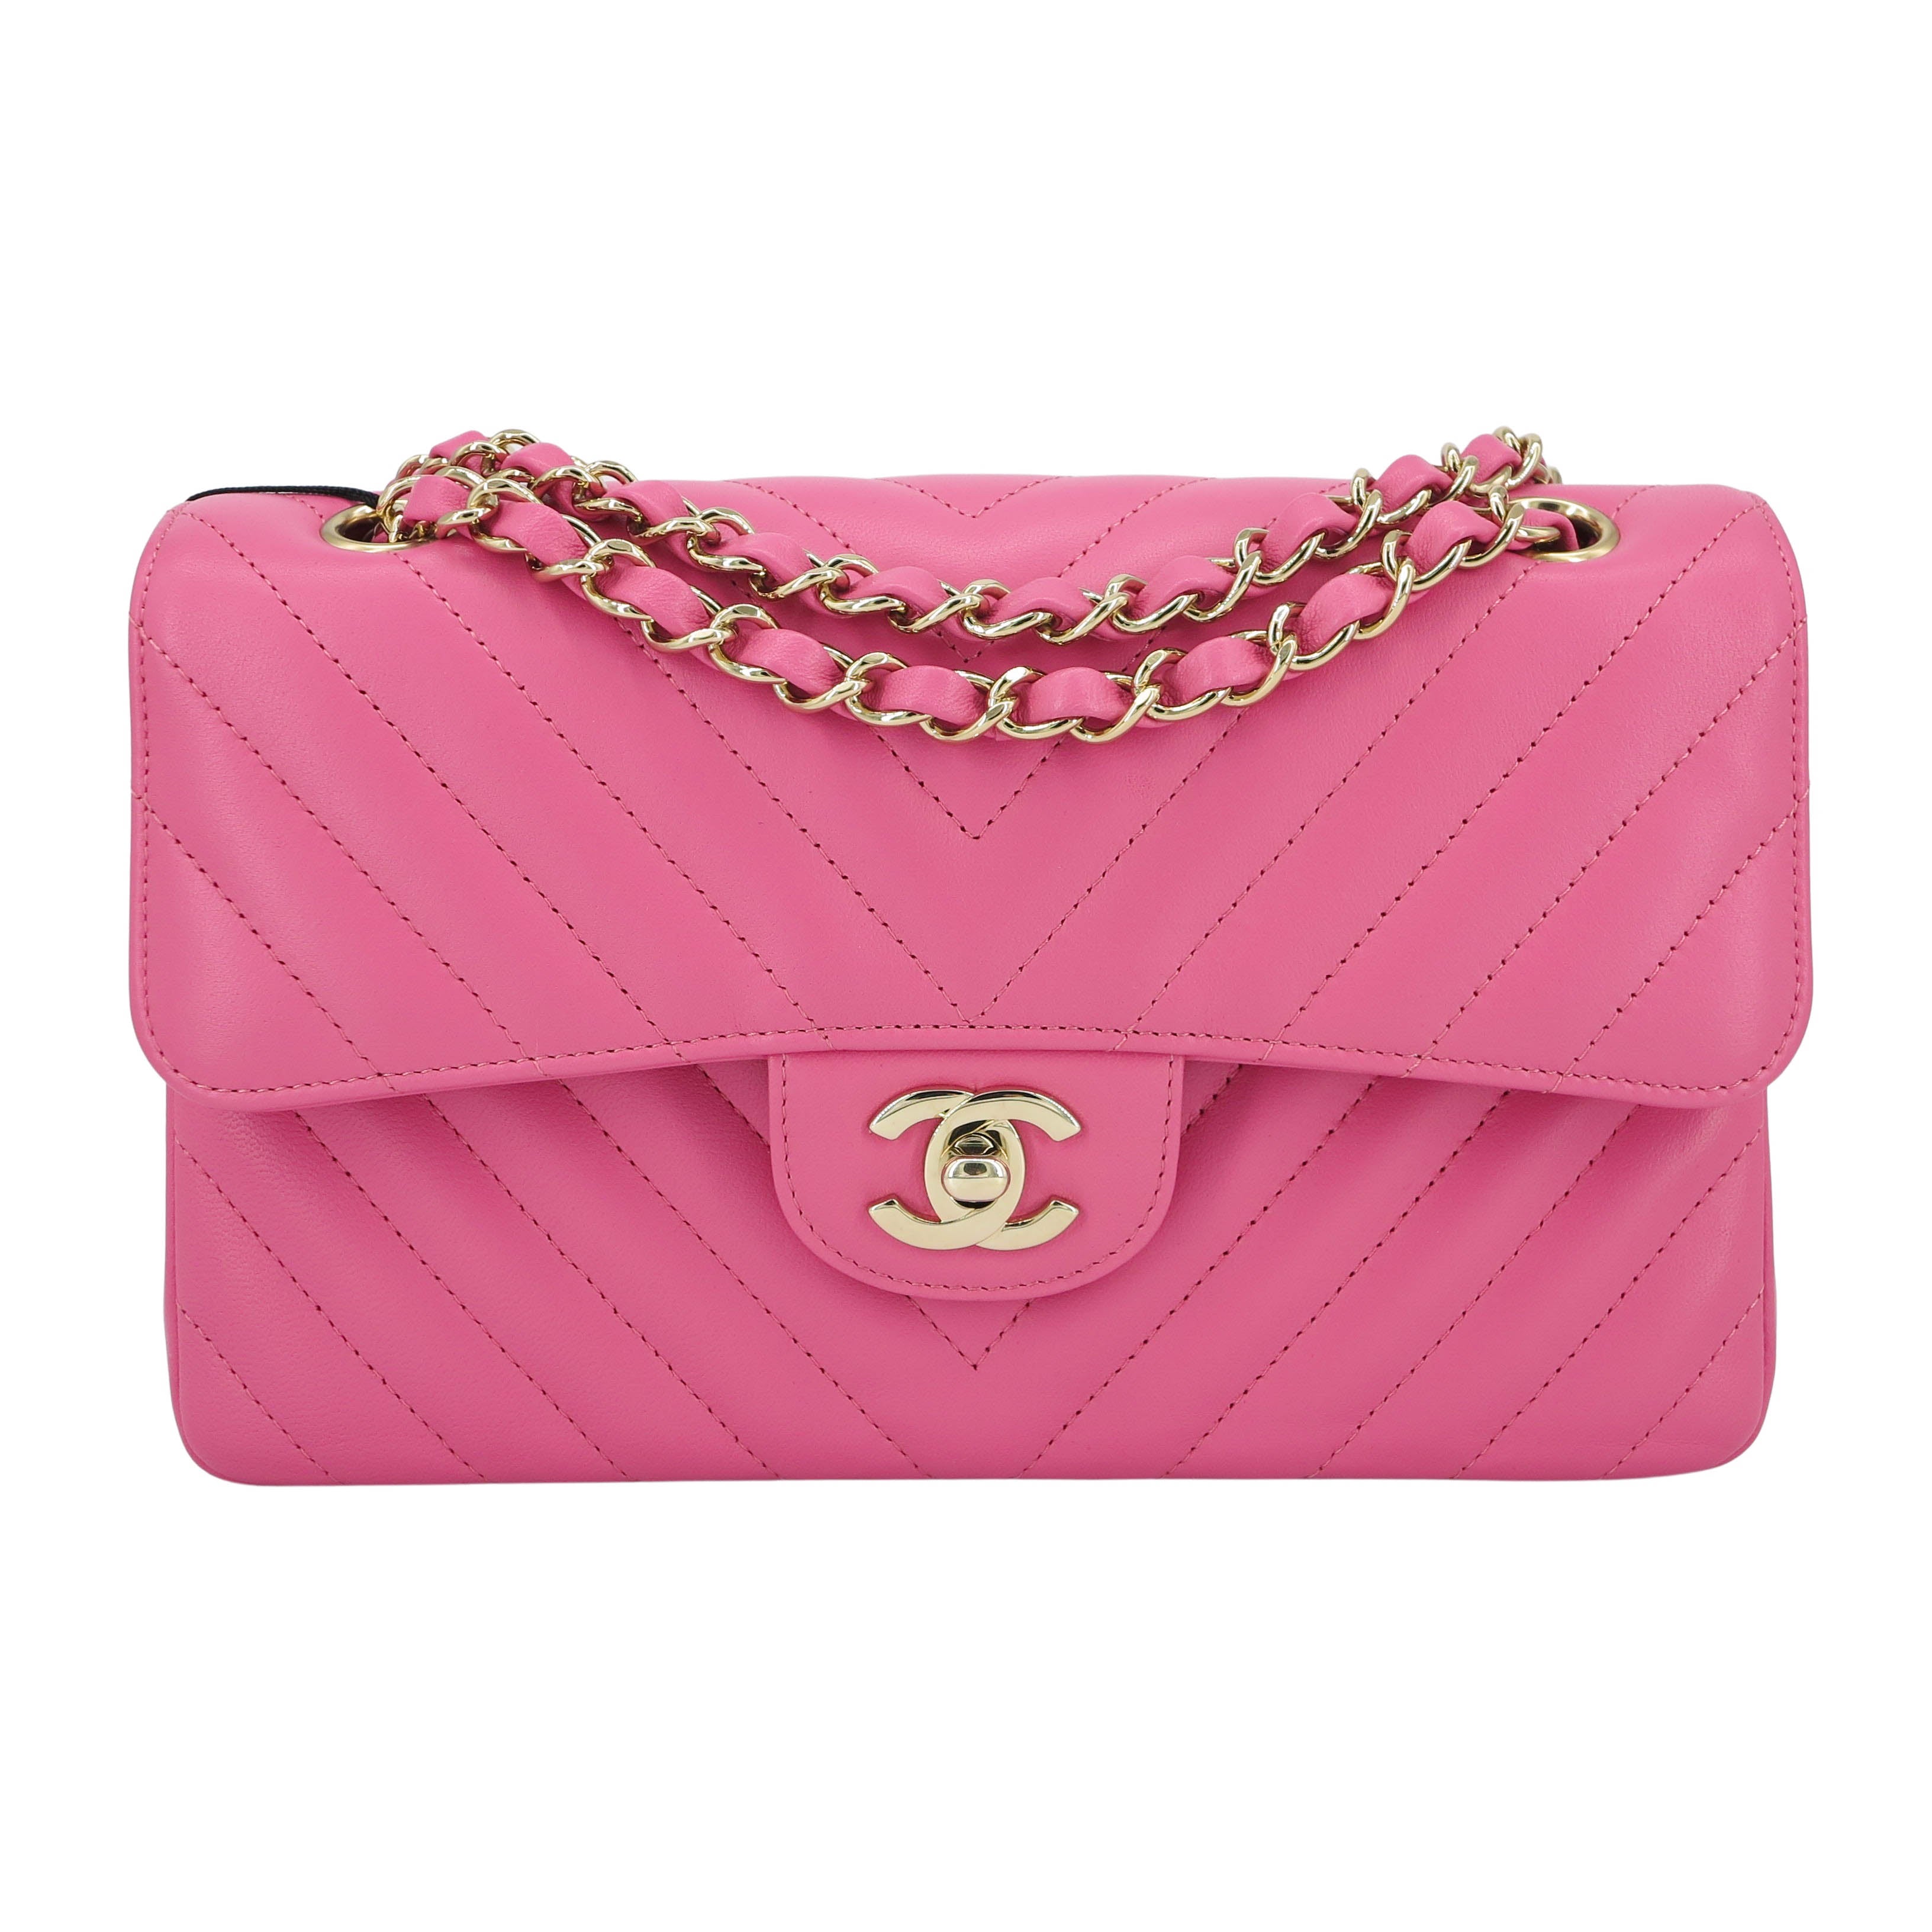 pink chanel inspiration purse